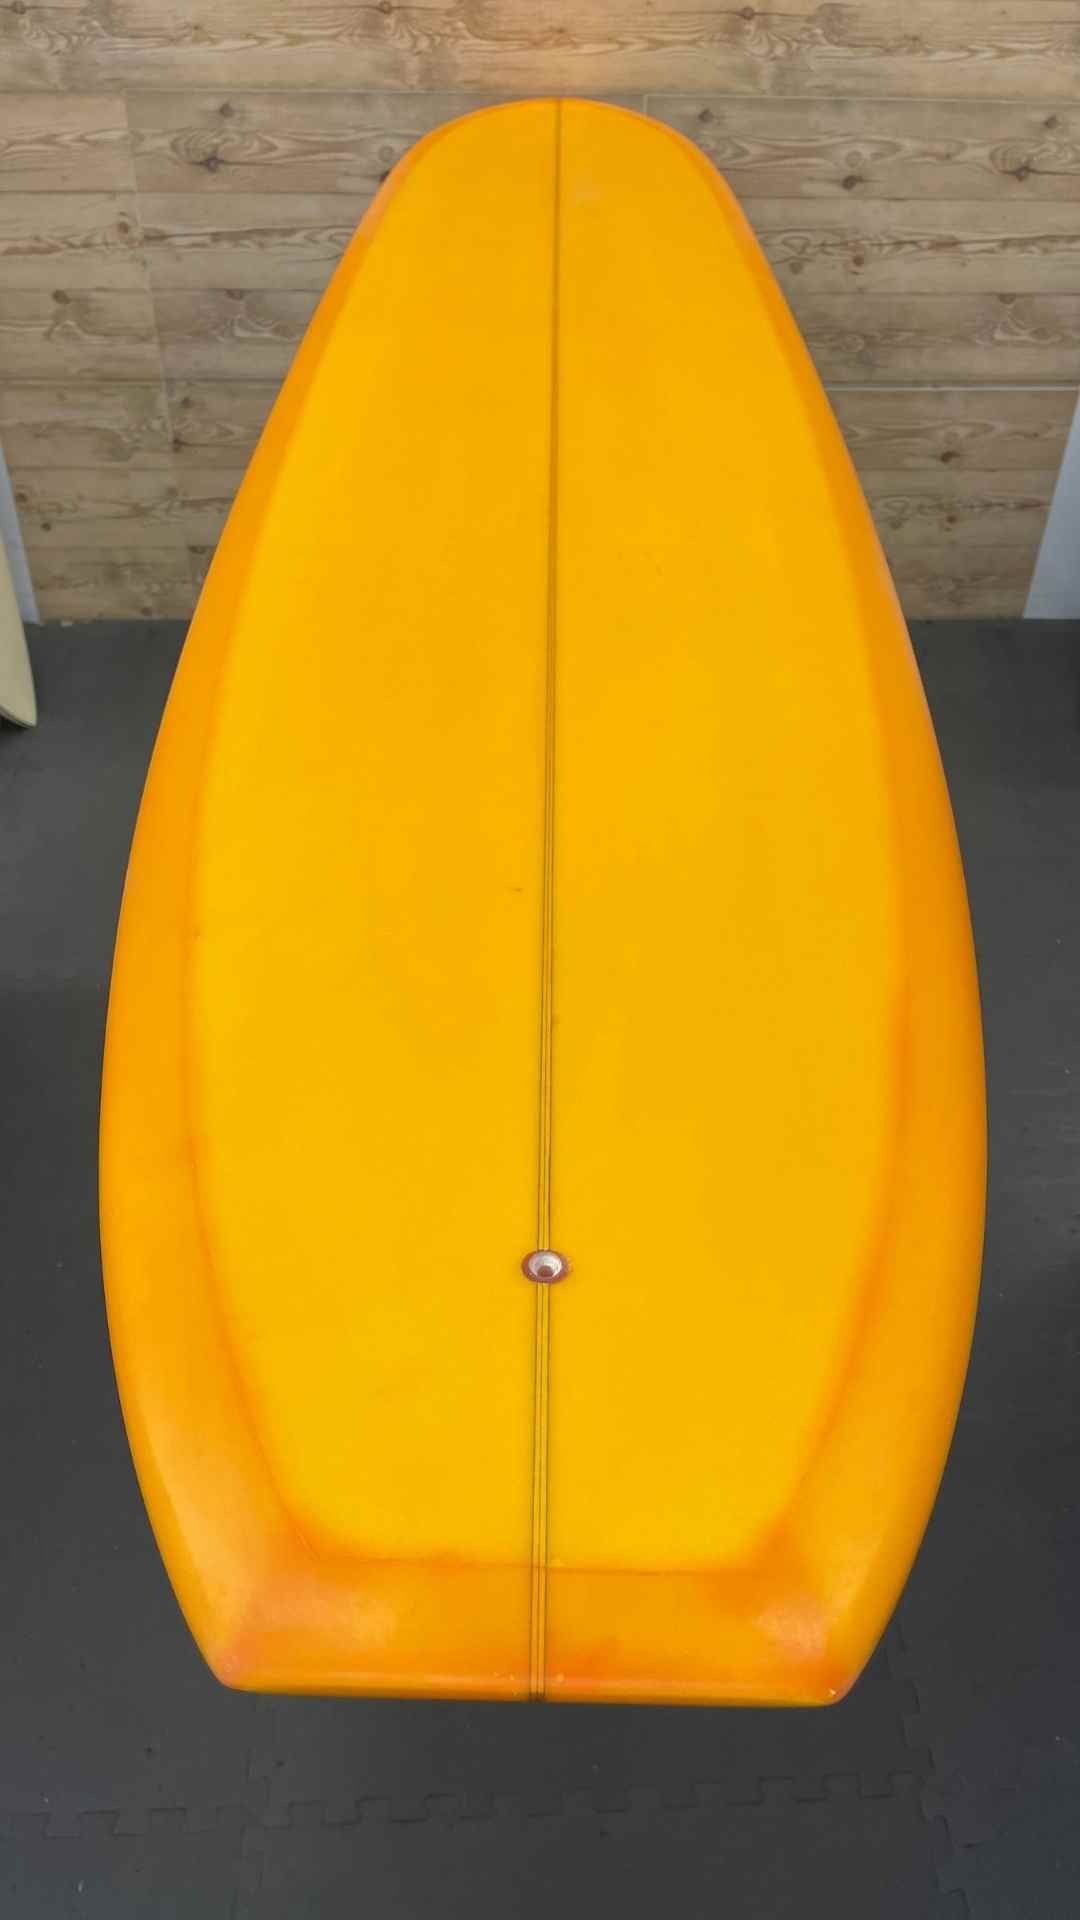 Classic Longboard 9'4"